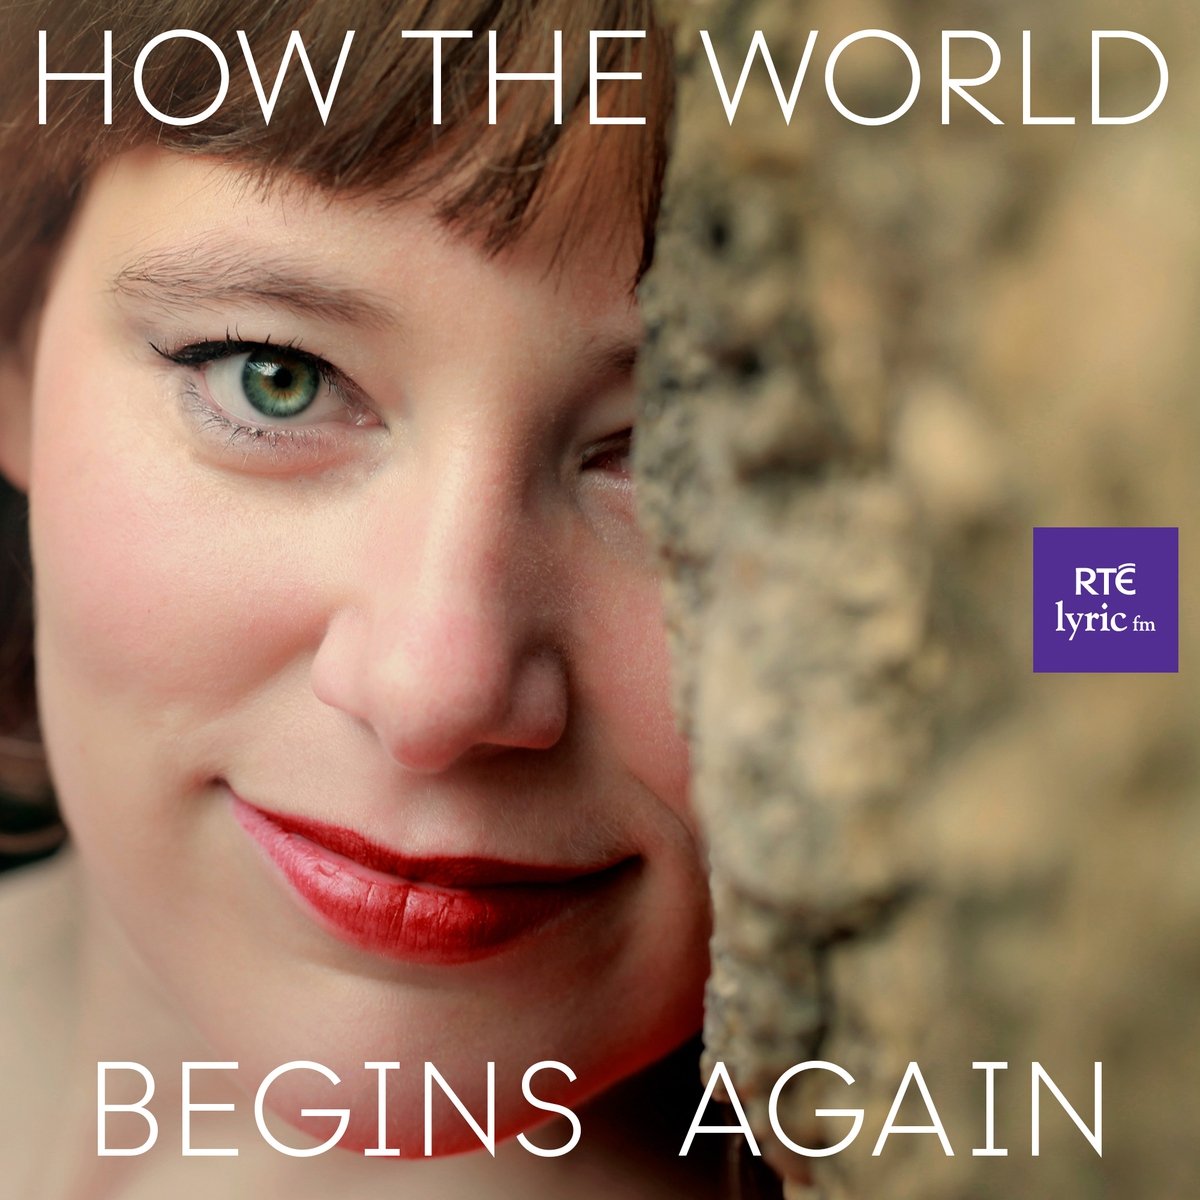 How the World Begins Again Episode 6 - Rebuilding